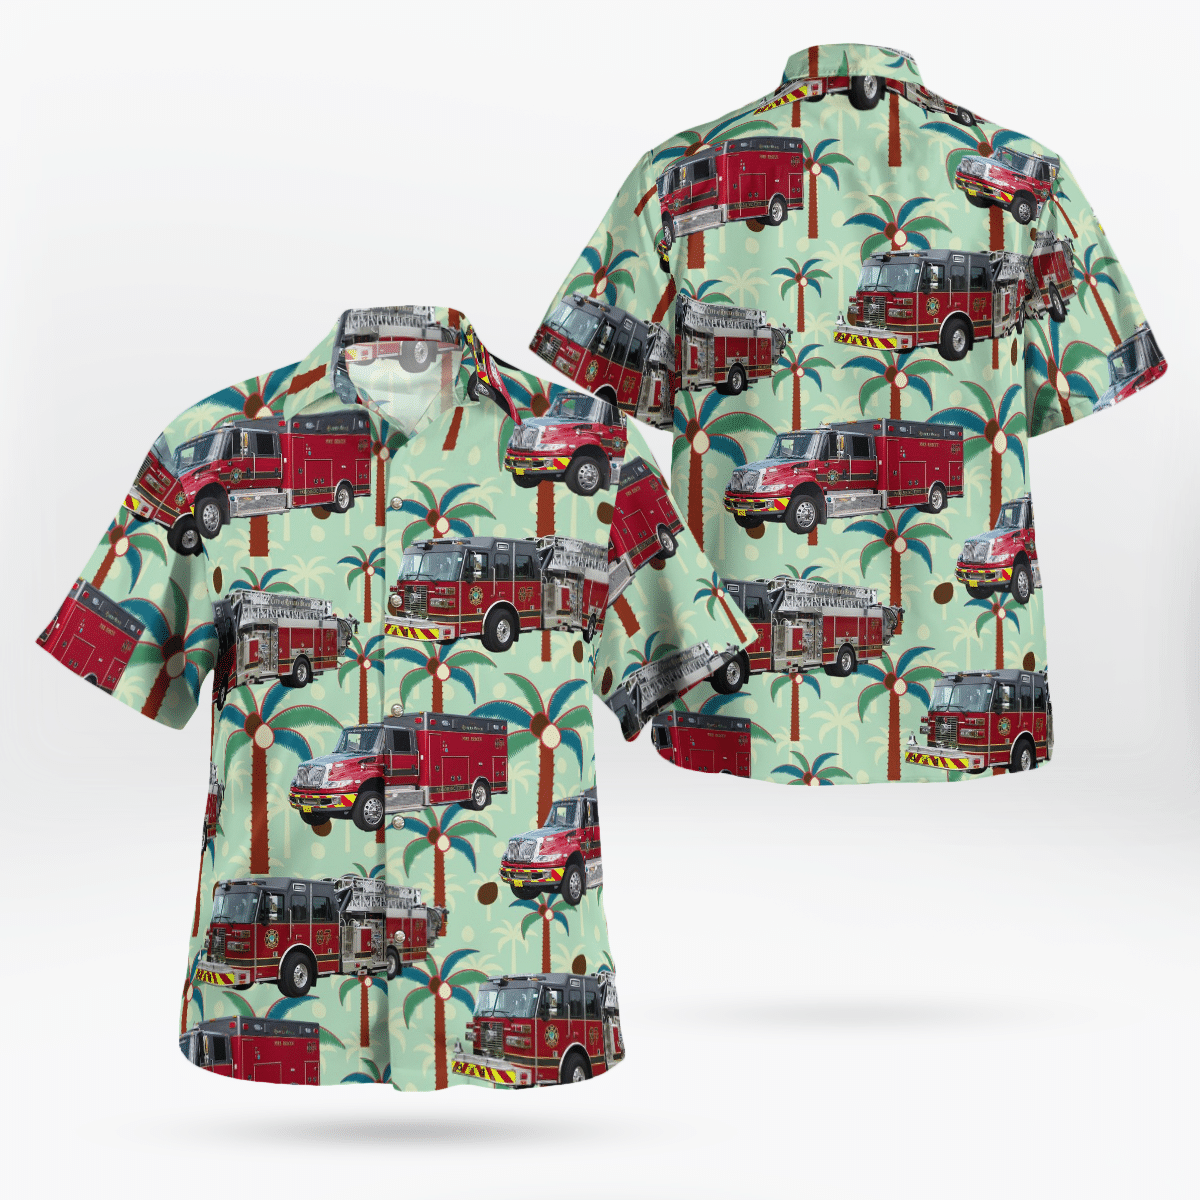 Listed below are some High-quality Aloha Shirt 381